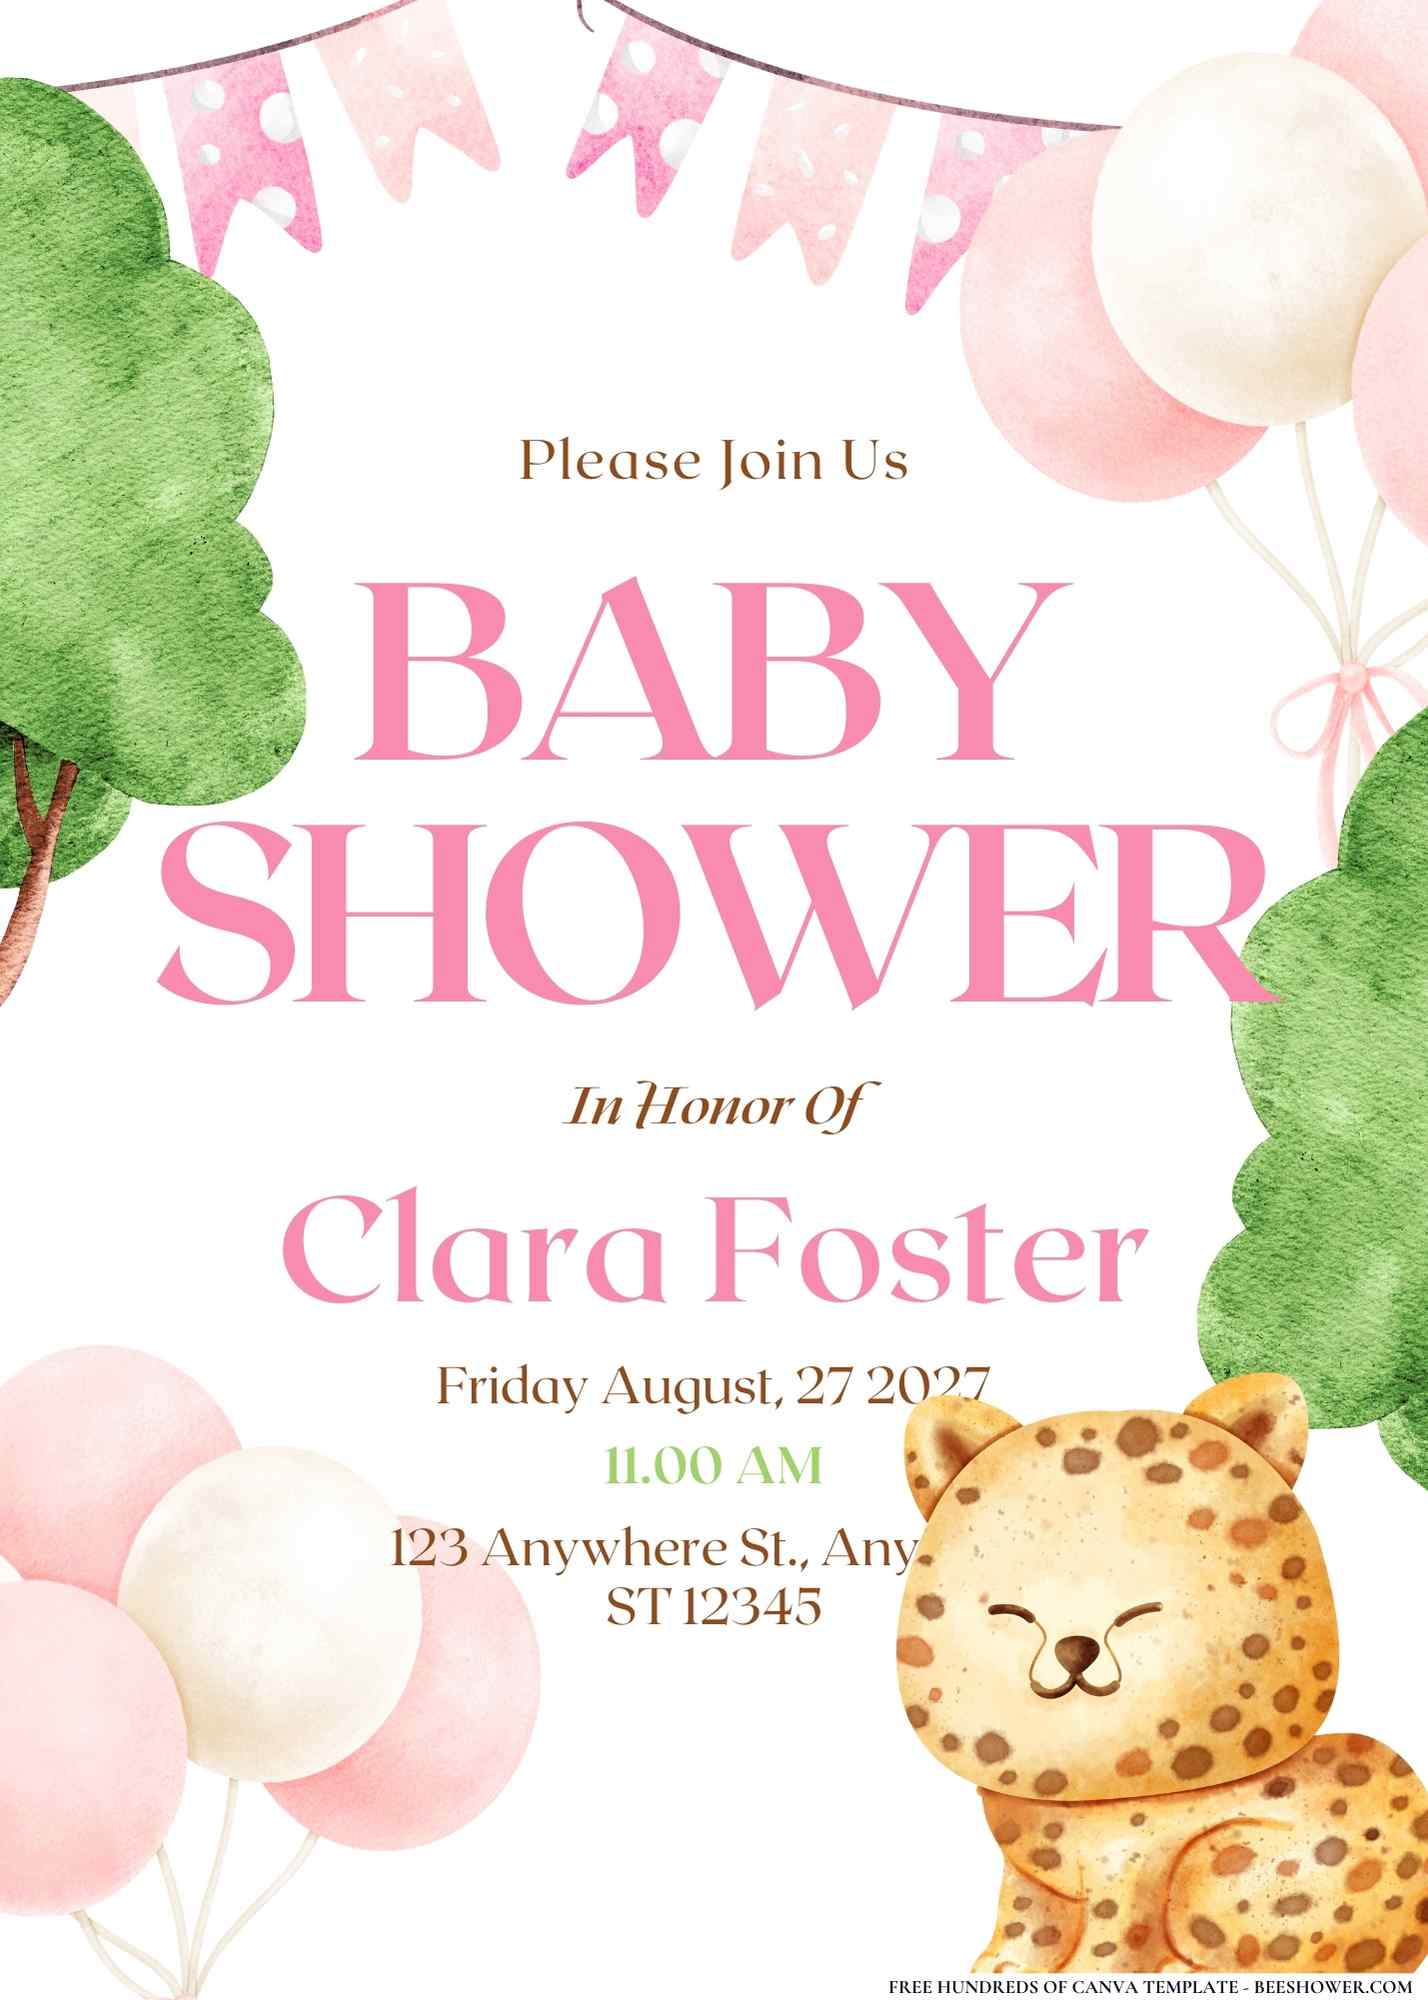 Woodland Creatures Baby Shower Invitation